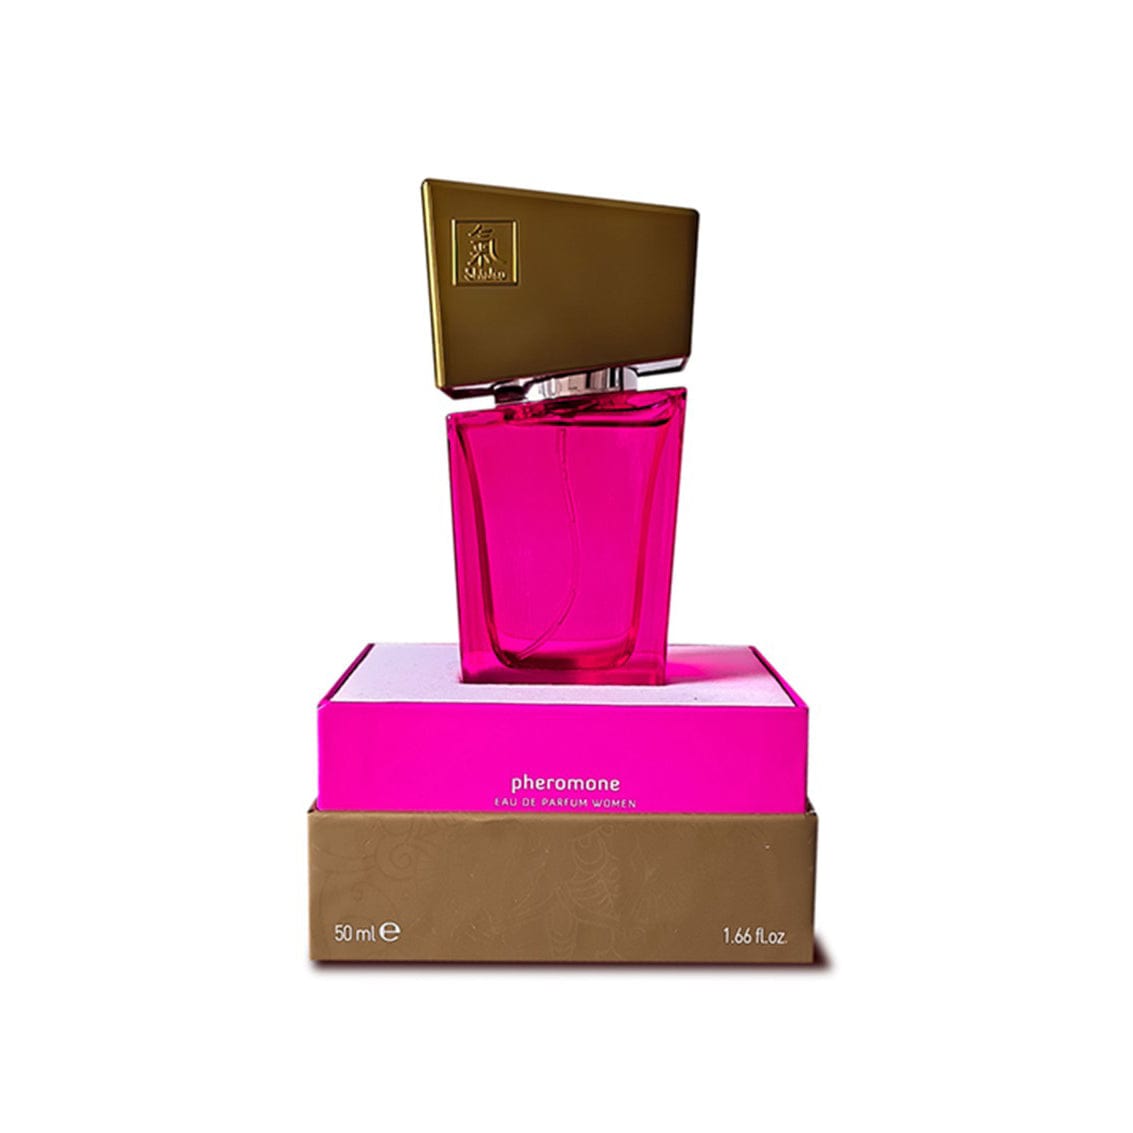 Shiatsu - Pheromone Eau de Parfum Perfume Spray Women 50ml (Pink) Pheromones 4042342006278 CherryAffairs